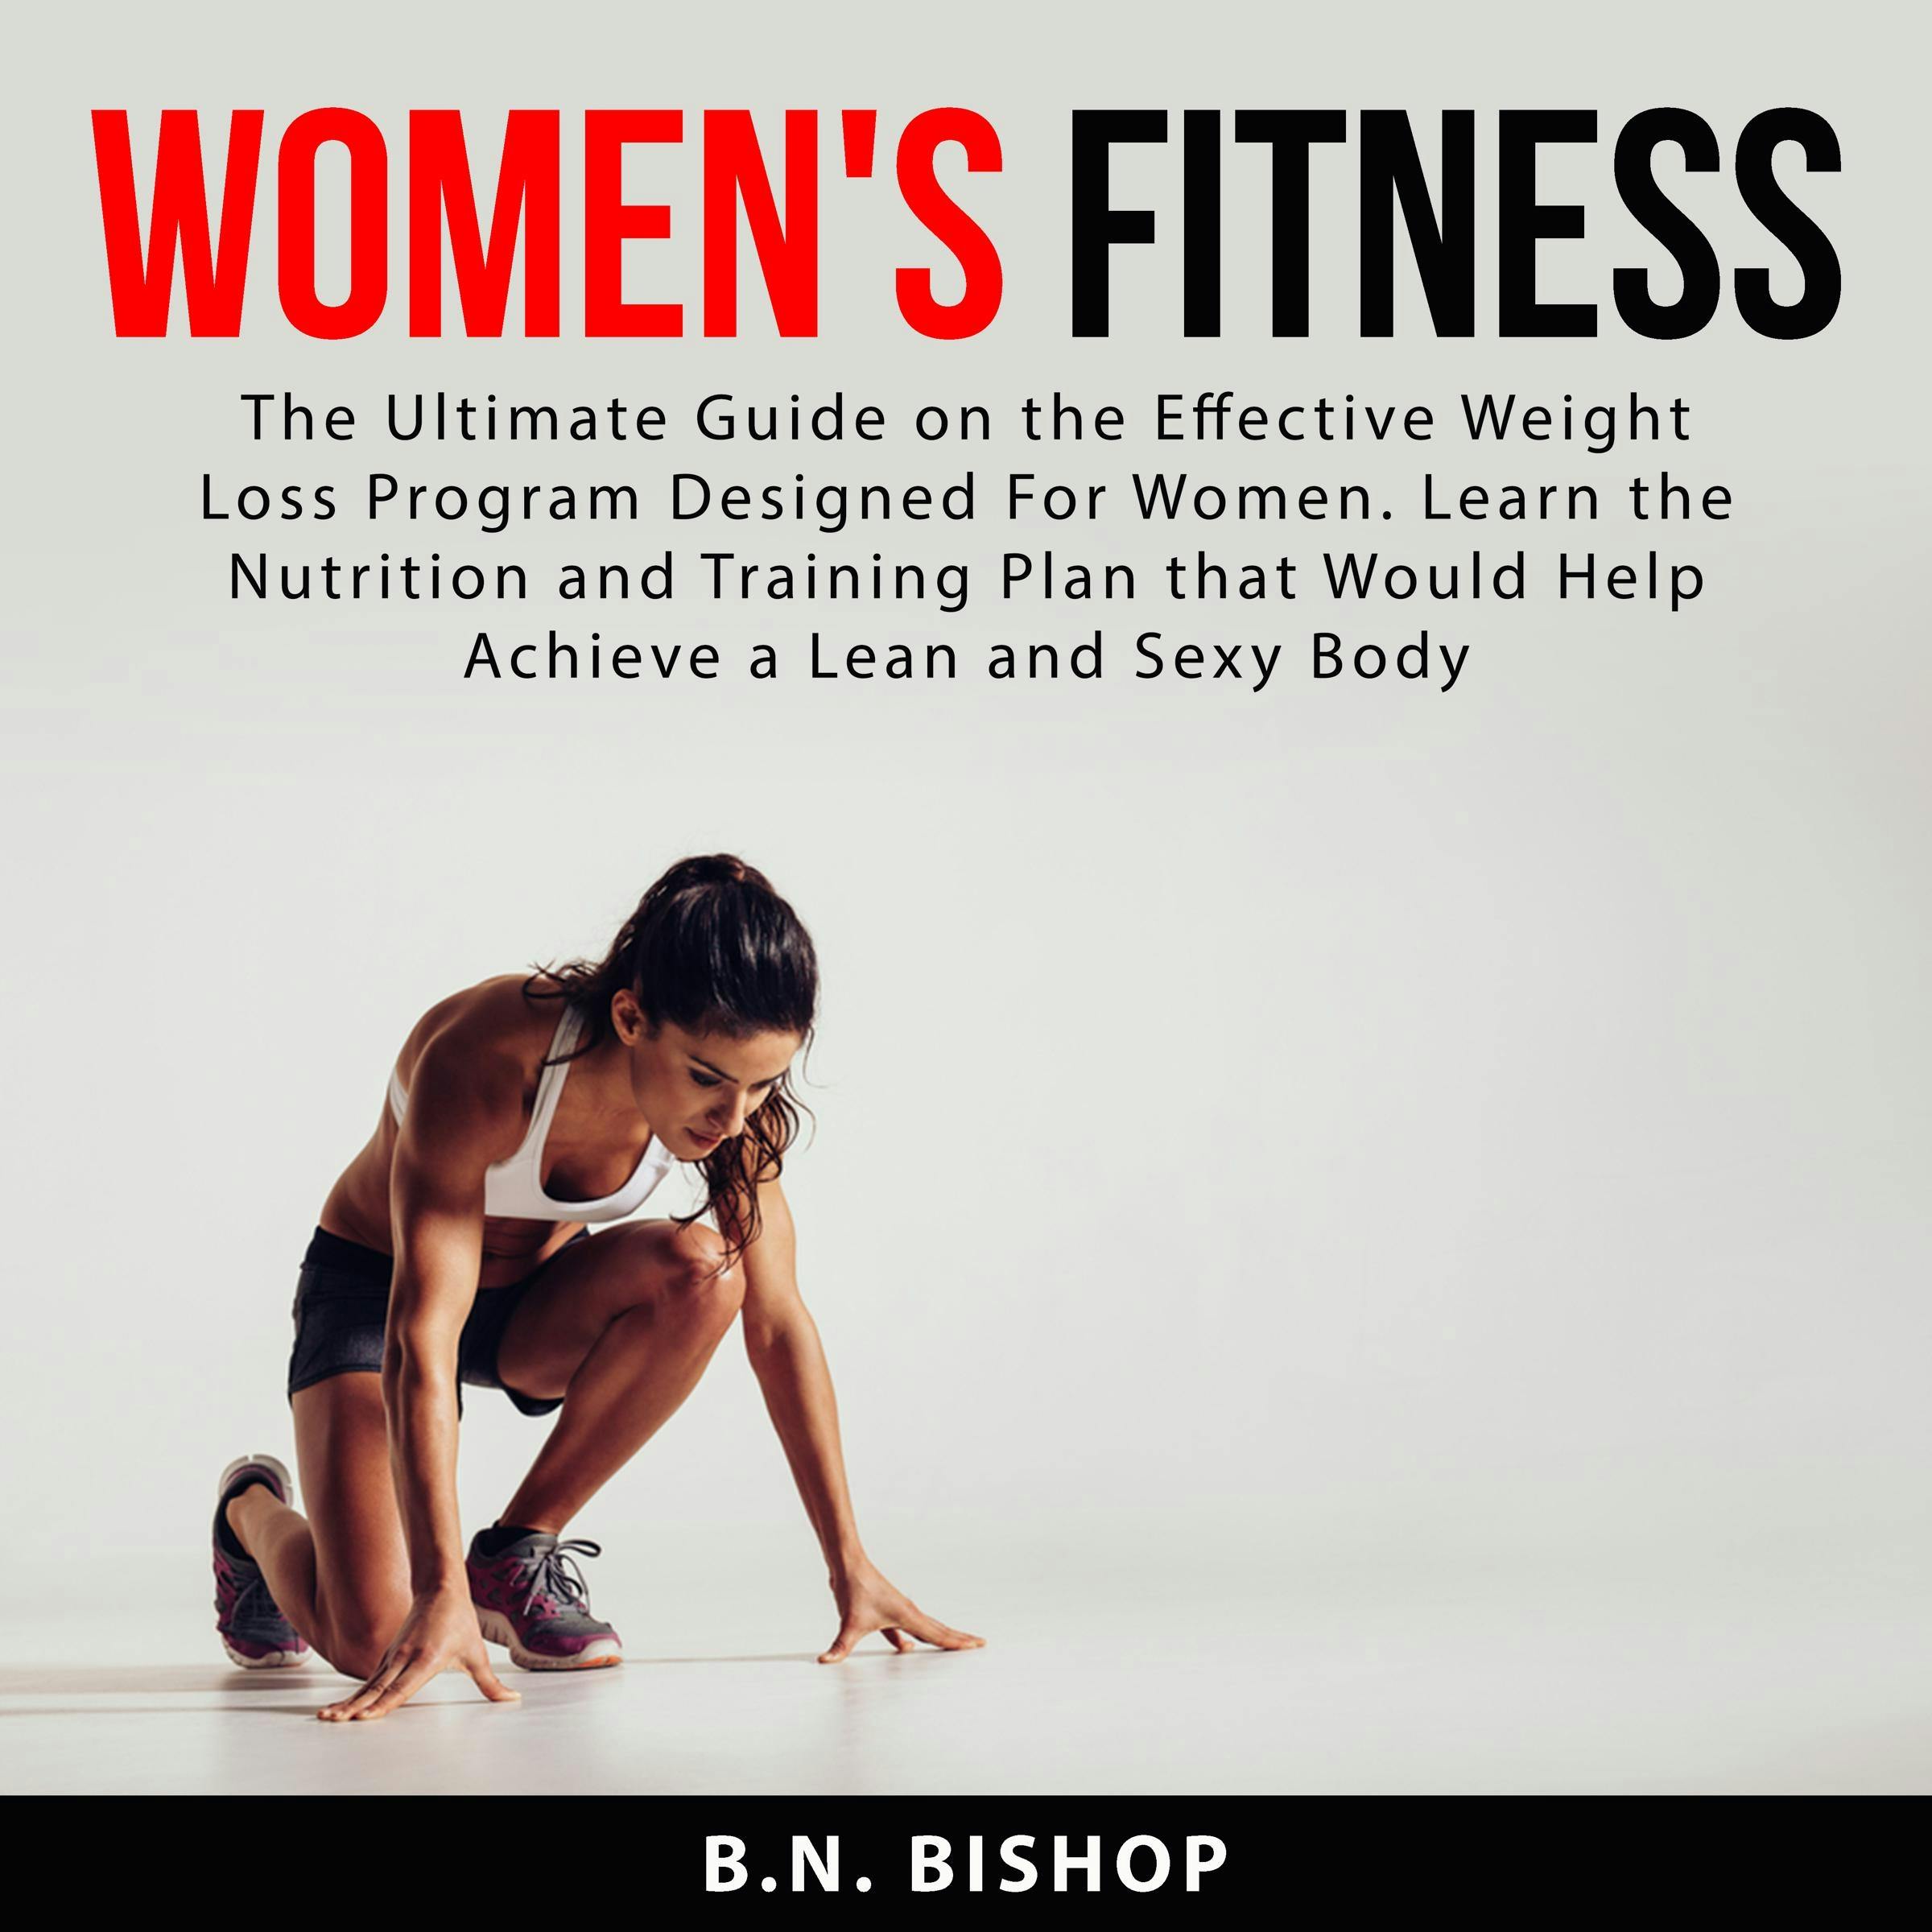 Health, Nutrition & Fitness Tips, Body